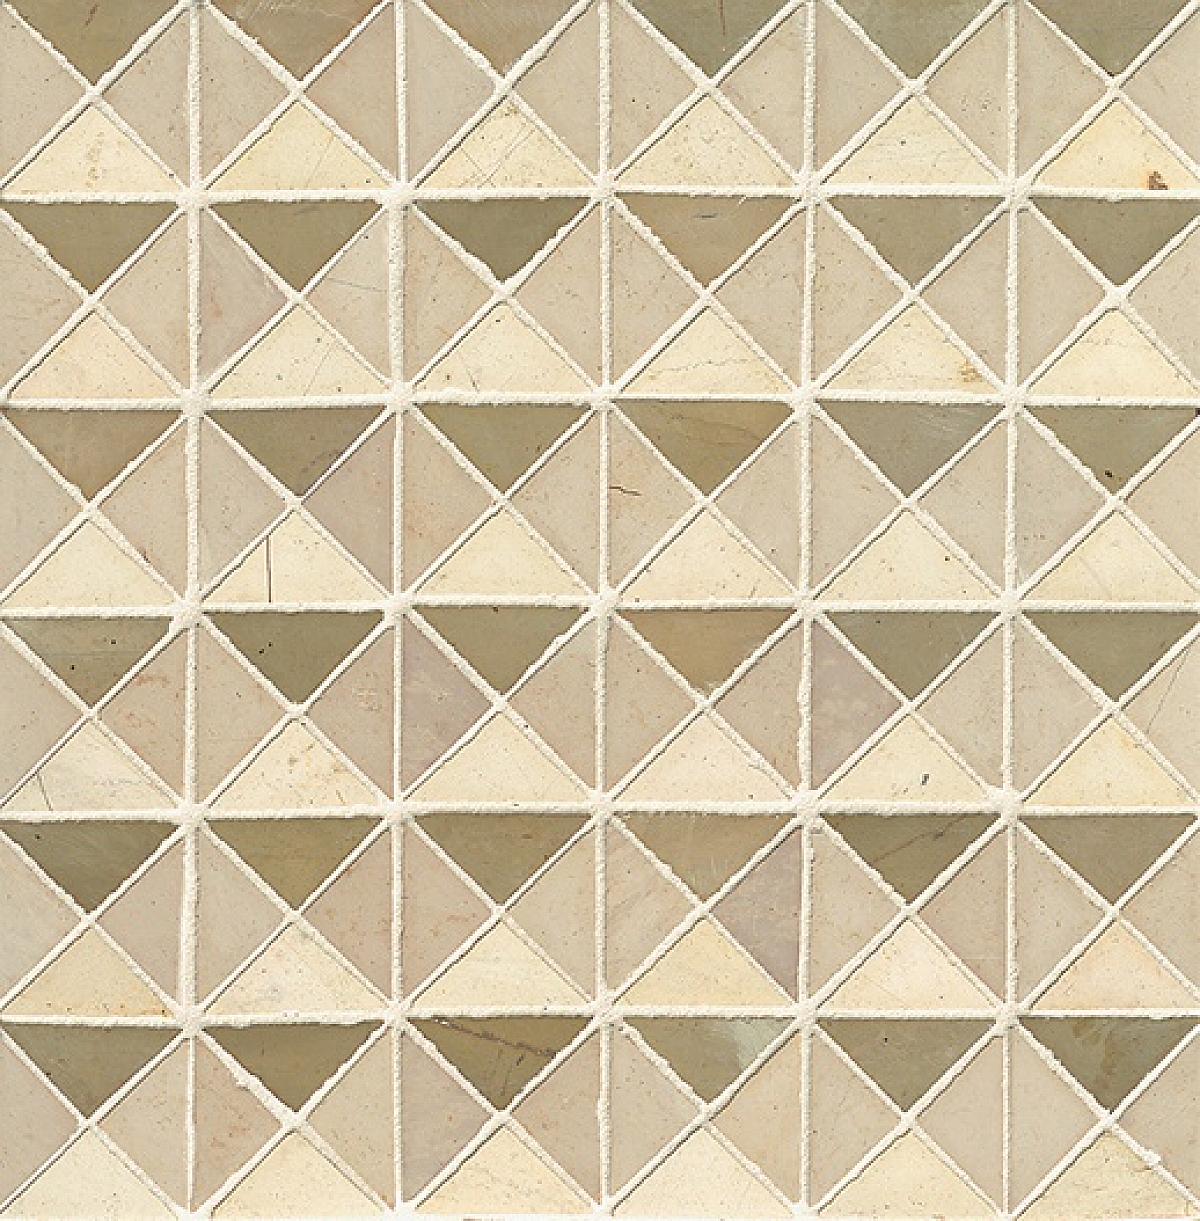 Cape Town Bo-Kaap Blocks Mosaic Tile